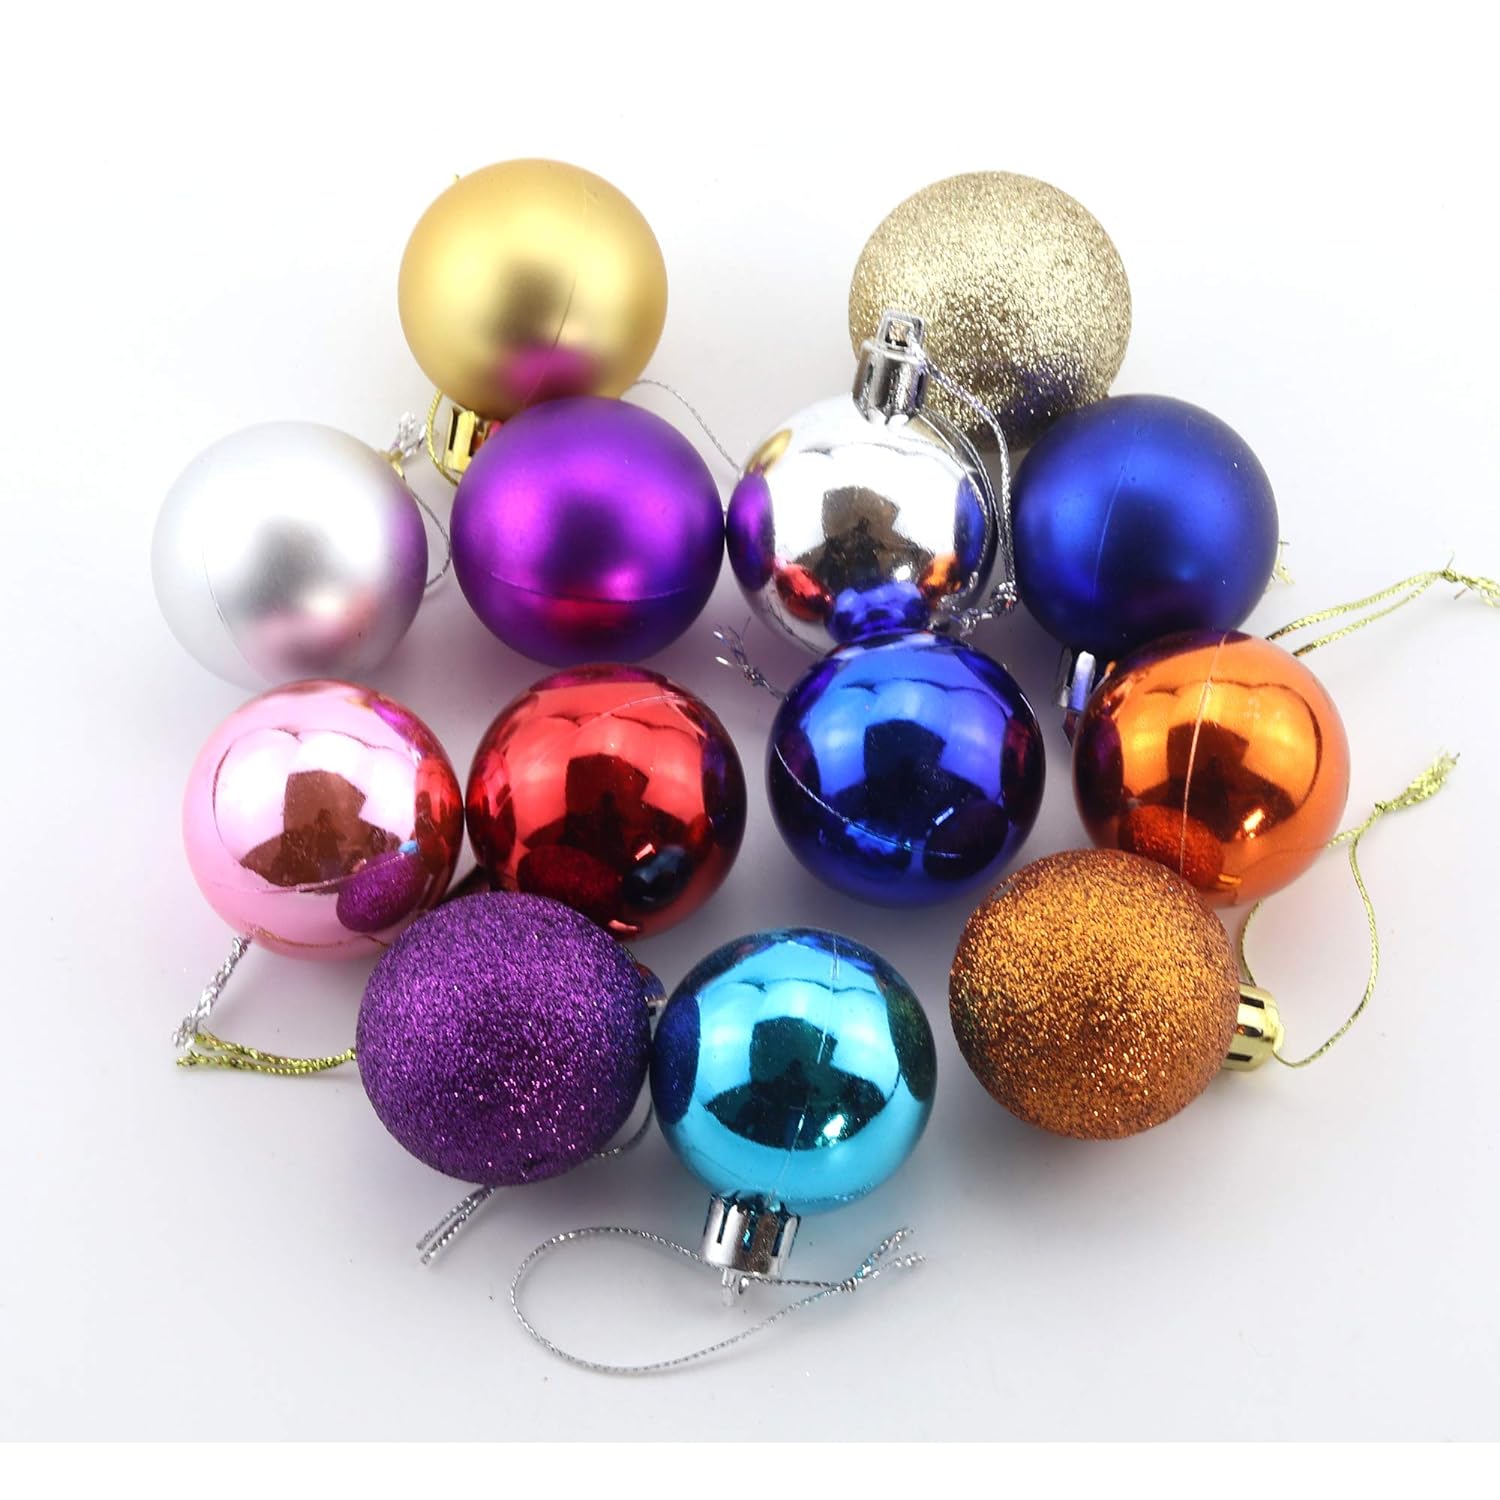 thinkstar 24Pcs 1.18" Small Christmas Ball Ornaments Shatterproof Christmas Decorations Tree Balls For Holiday Wedding Party Decorati…